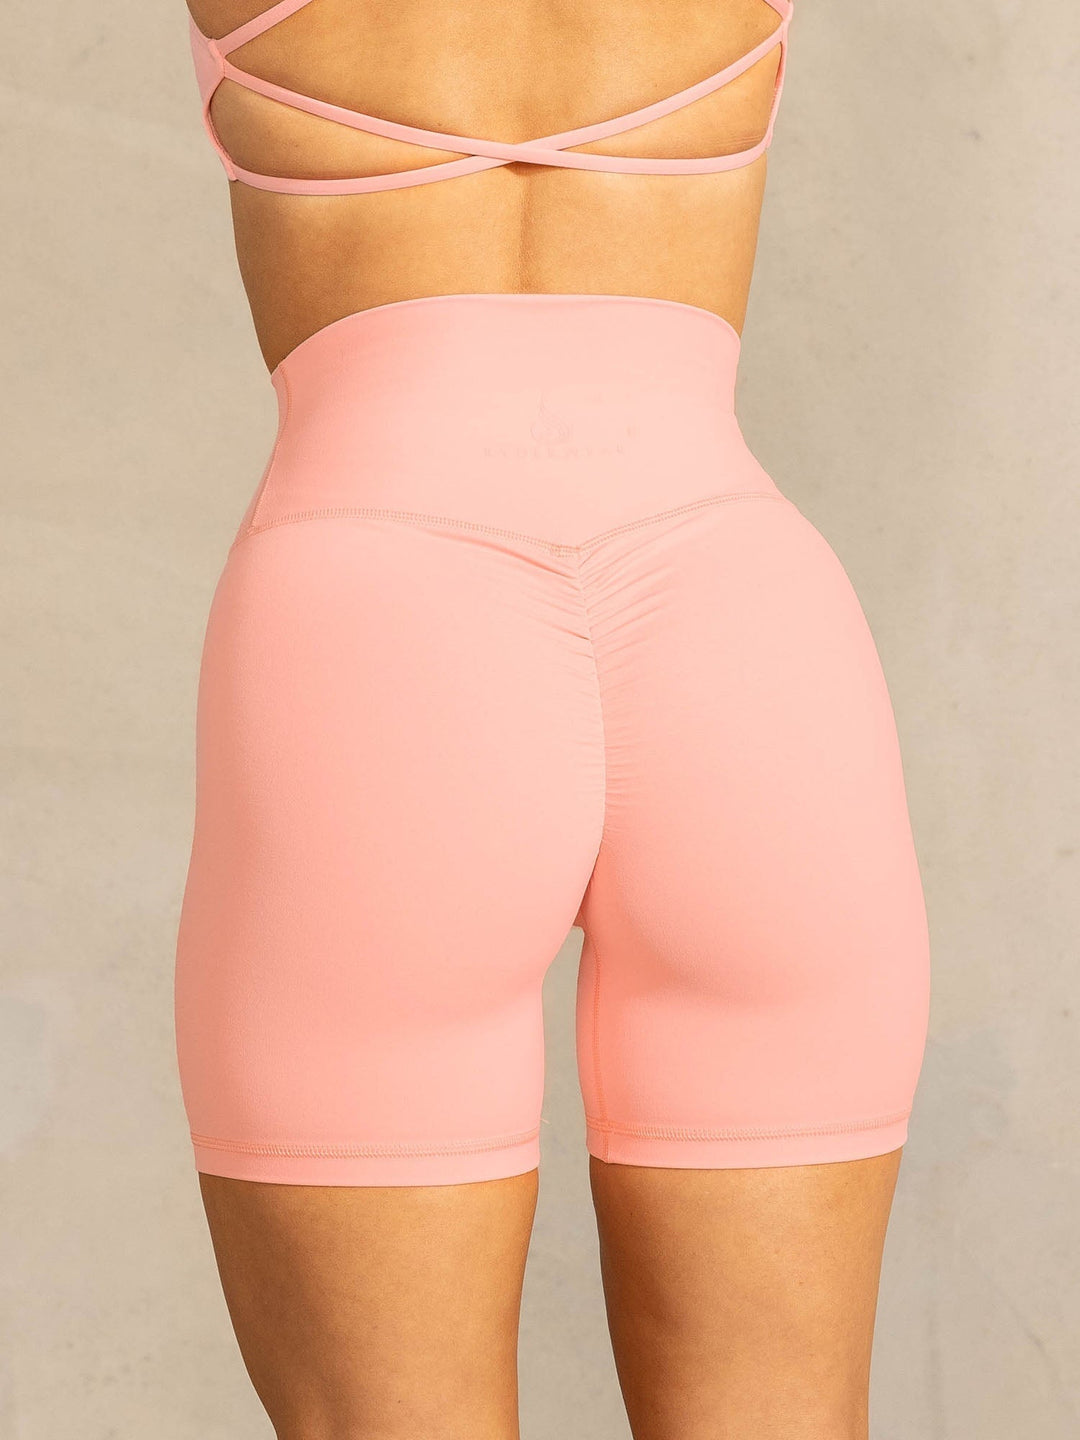 NKD High Waisted Scrunch Shorts - Pink Clothing Ryderwear 